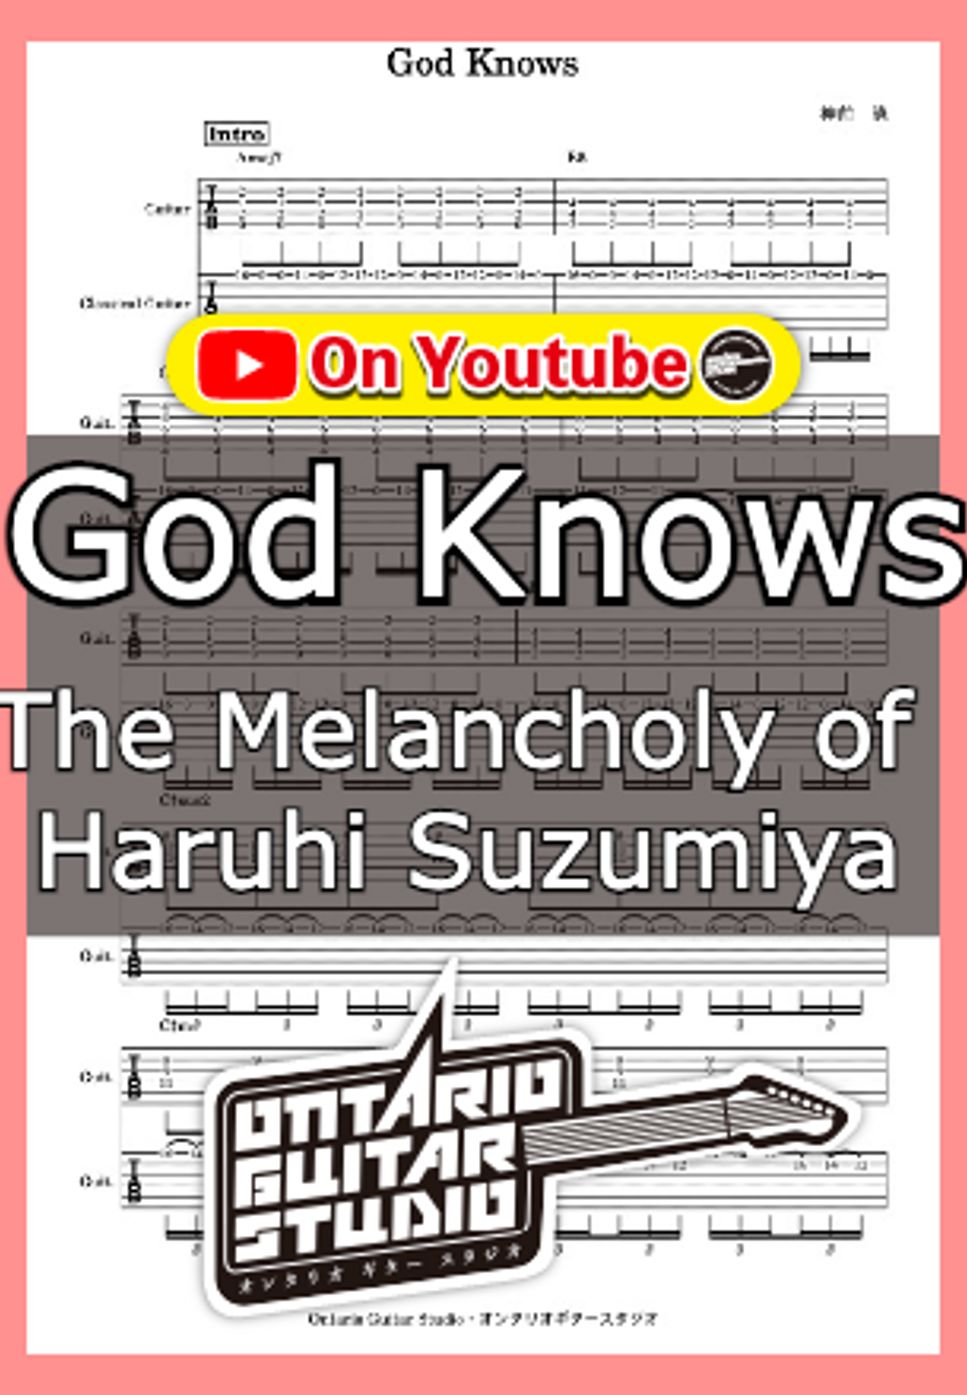 The Melancholy of Haruhi Suzumiya - God Knows by Ontario Guitar Studio